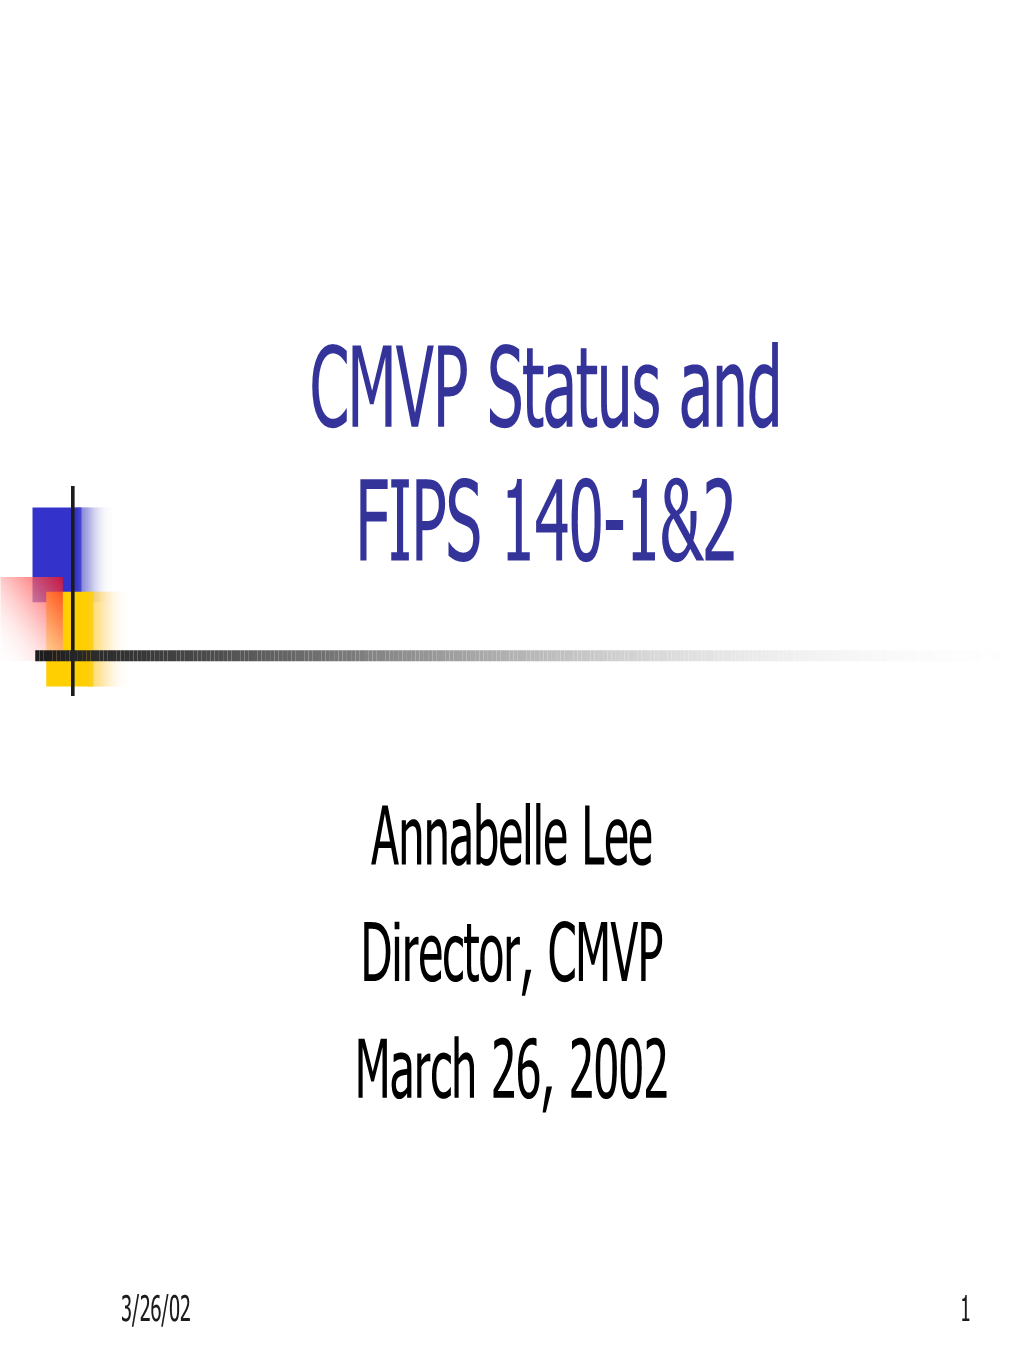 CMVP Status and FIPS 140-1&2